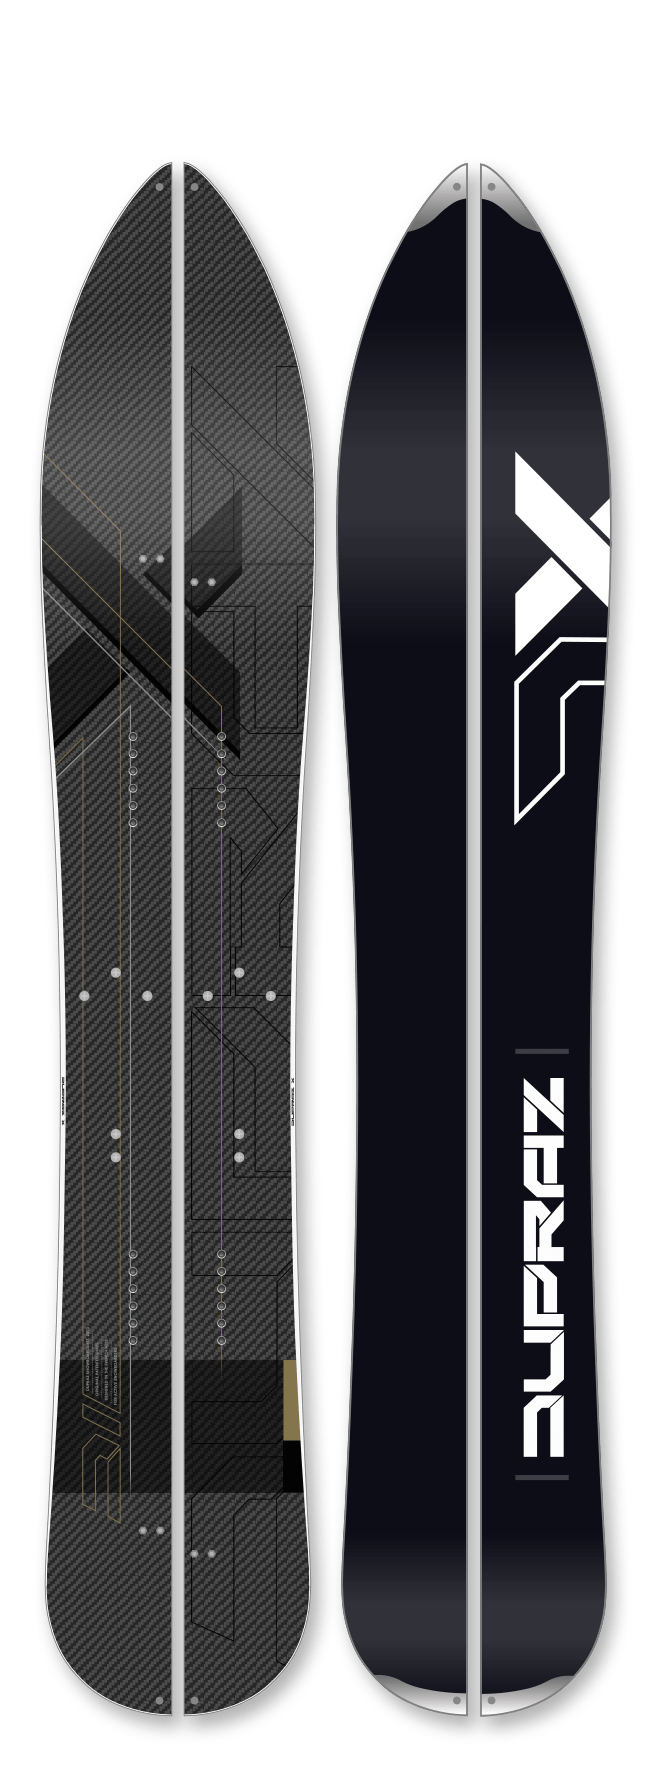 Dupraz-snowboards-D1-X6-SPLIT-top-base